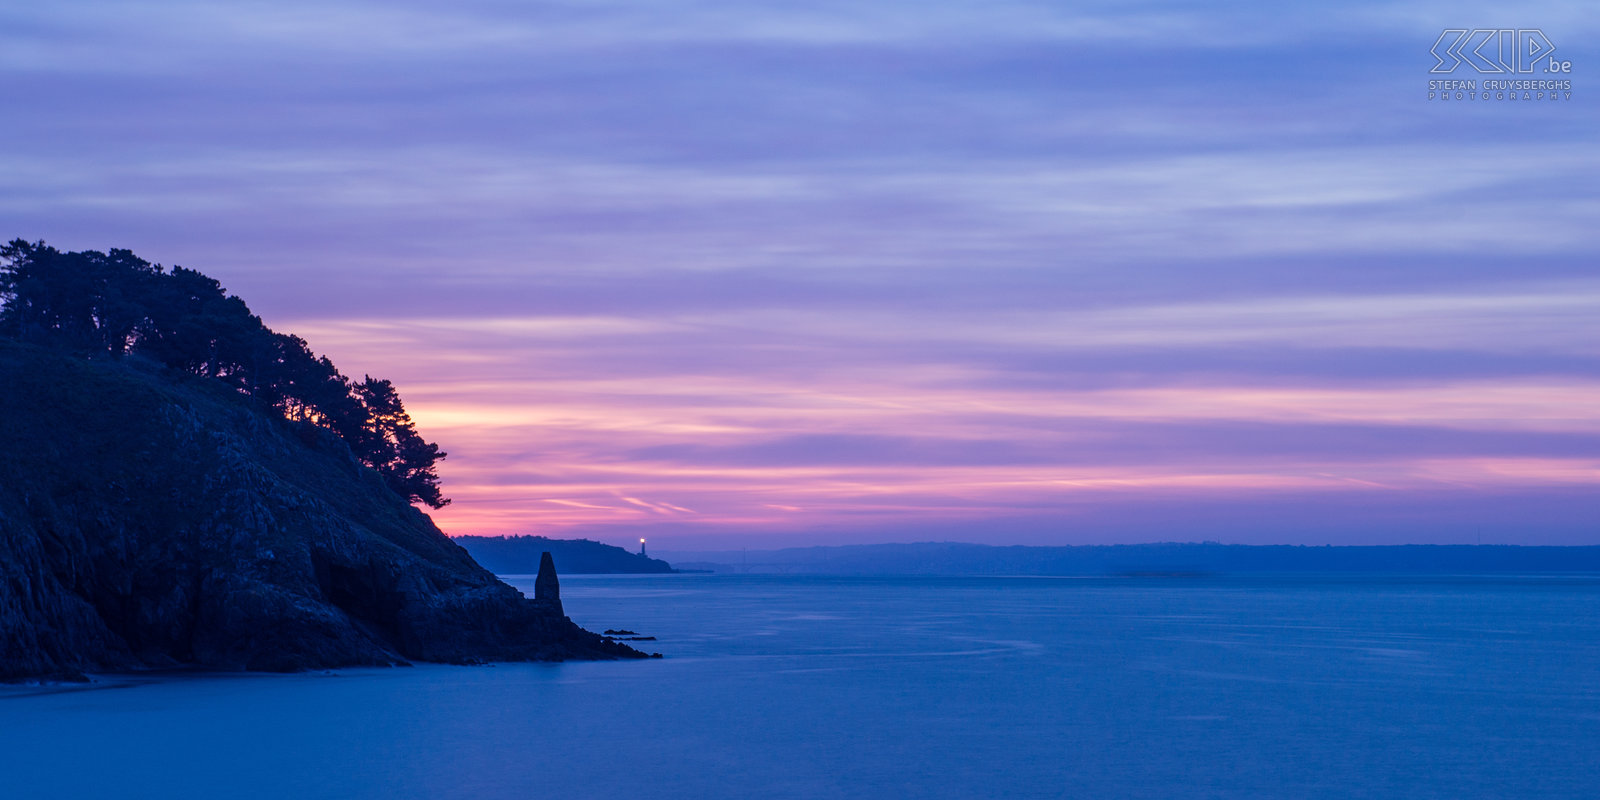 Sunrise Plouzane Sunrise at the rocky coast of Plouzane near the lighthouse of Petit Minou. Stefan Cruysberghs